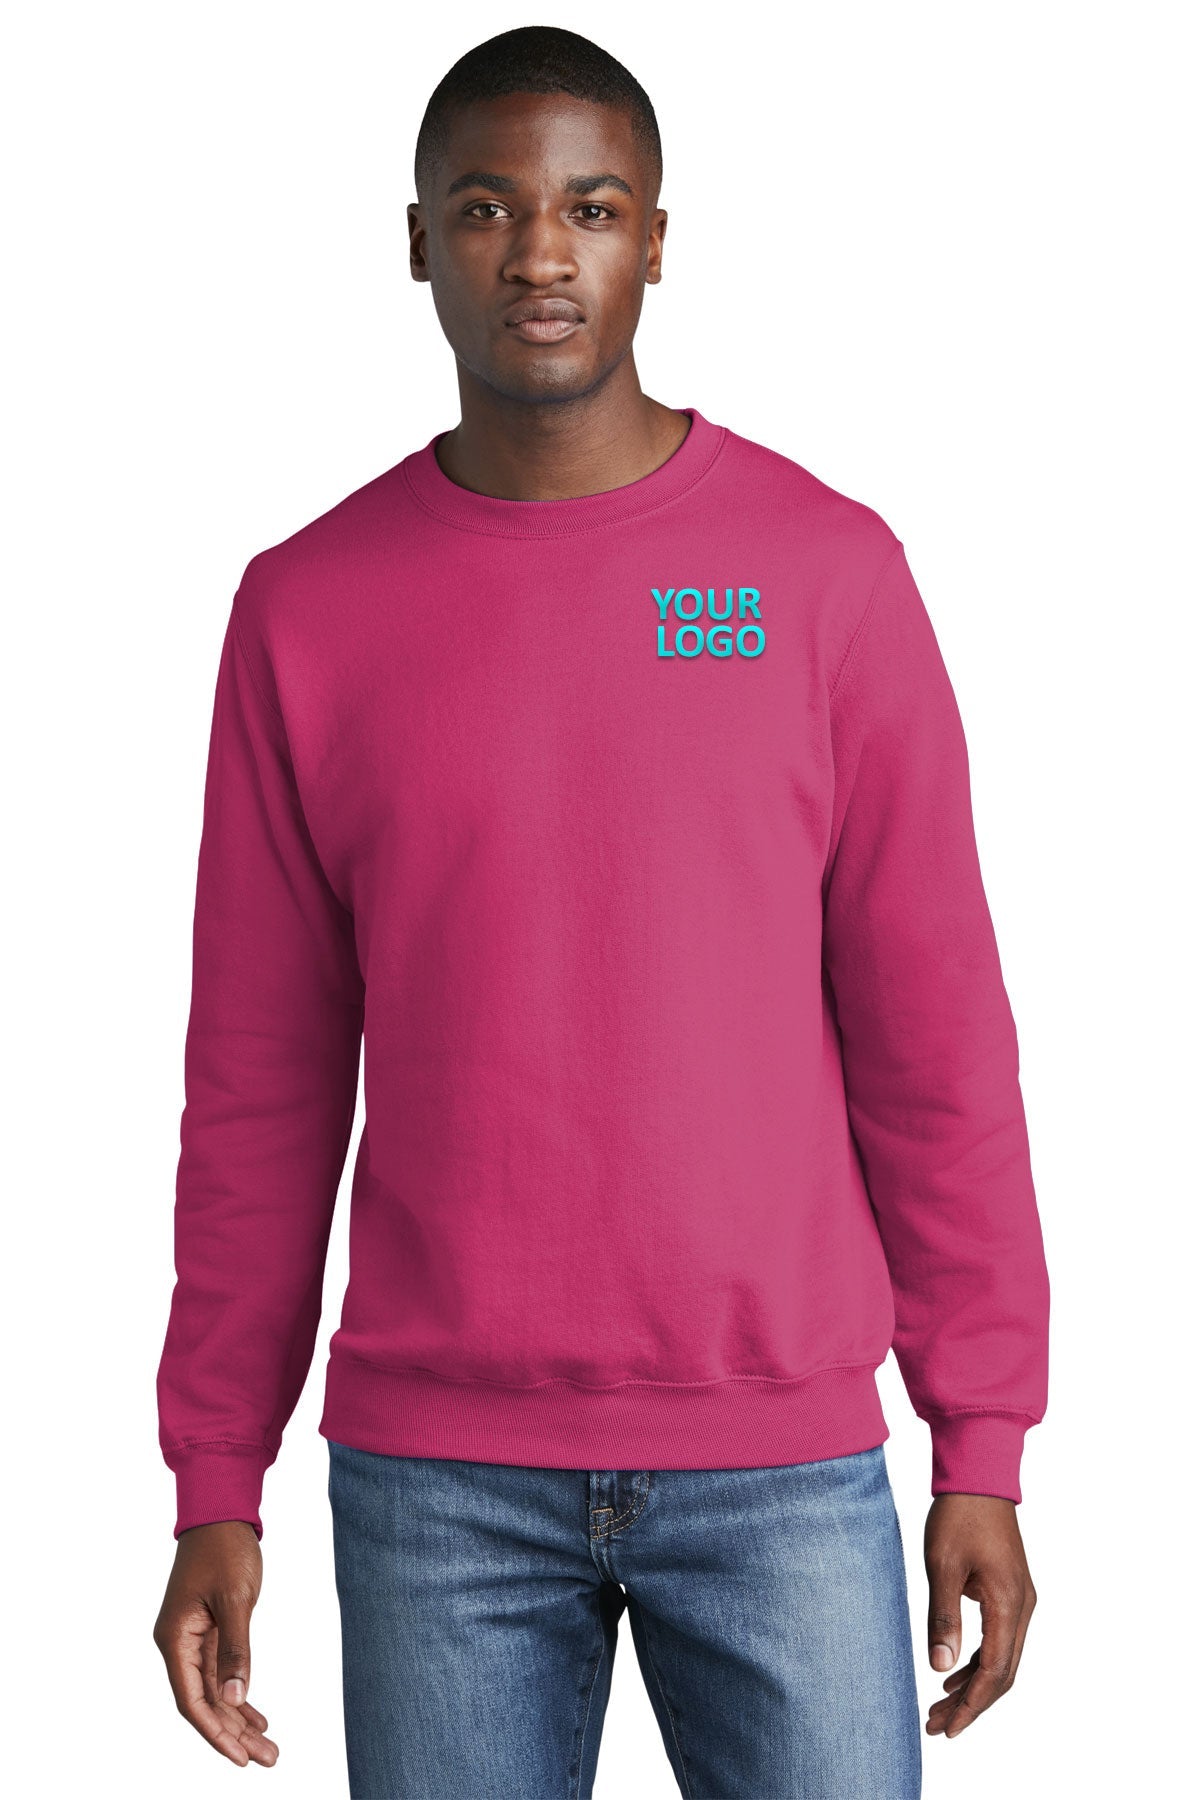 port & company sangria pc78 company sweatshirts embroidered